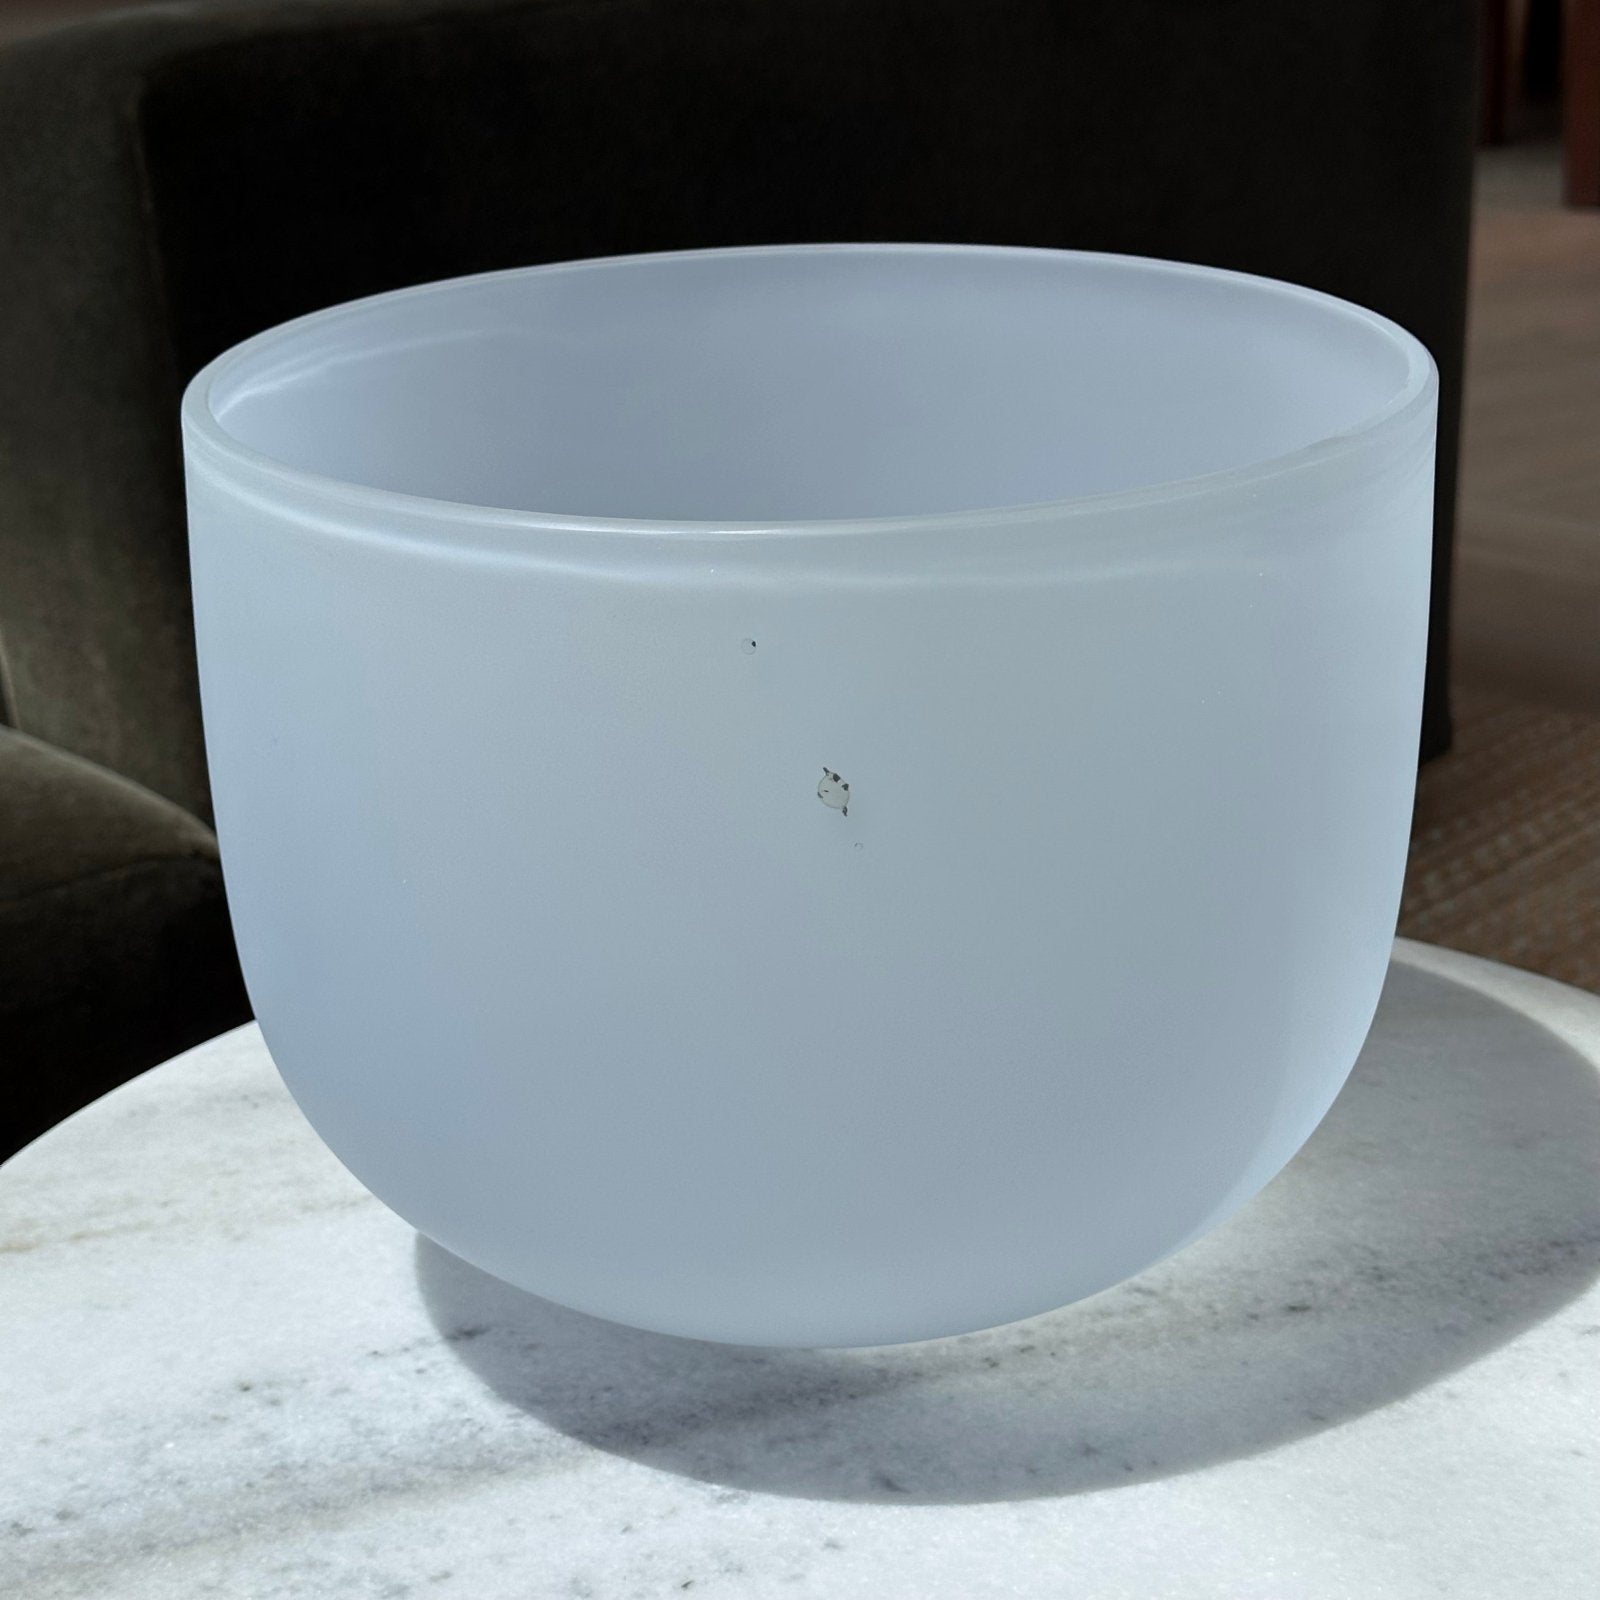 11" Crystal Singing Bowl - Made in New York, Grade C1 - Quartz Crystal Singing Bowl Made in USA